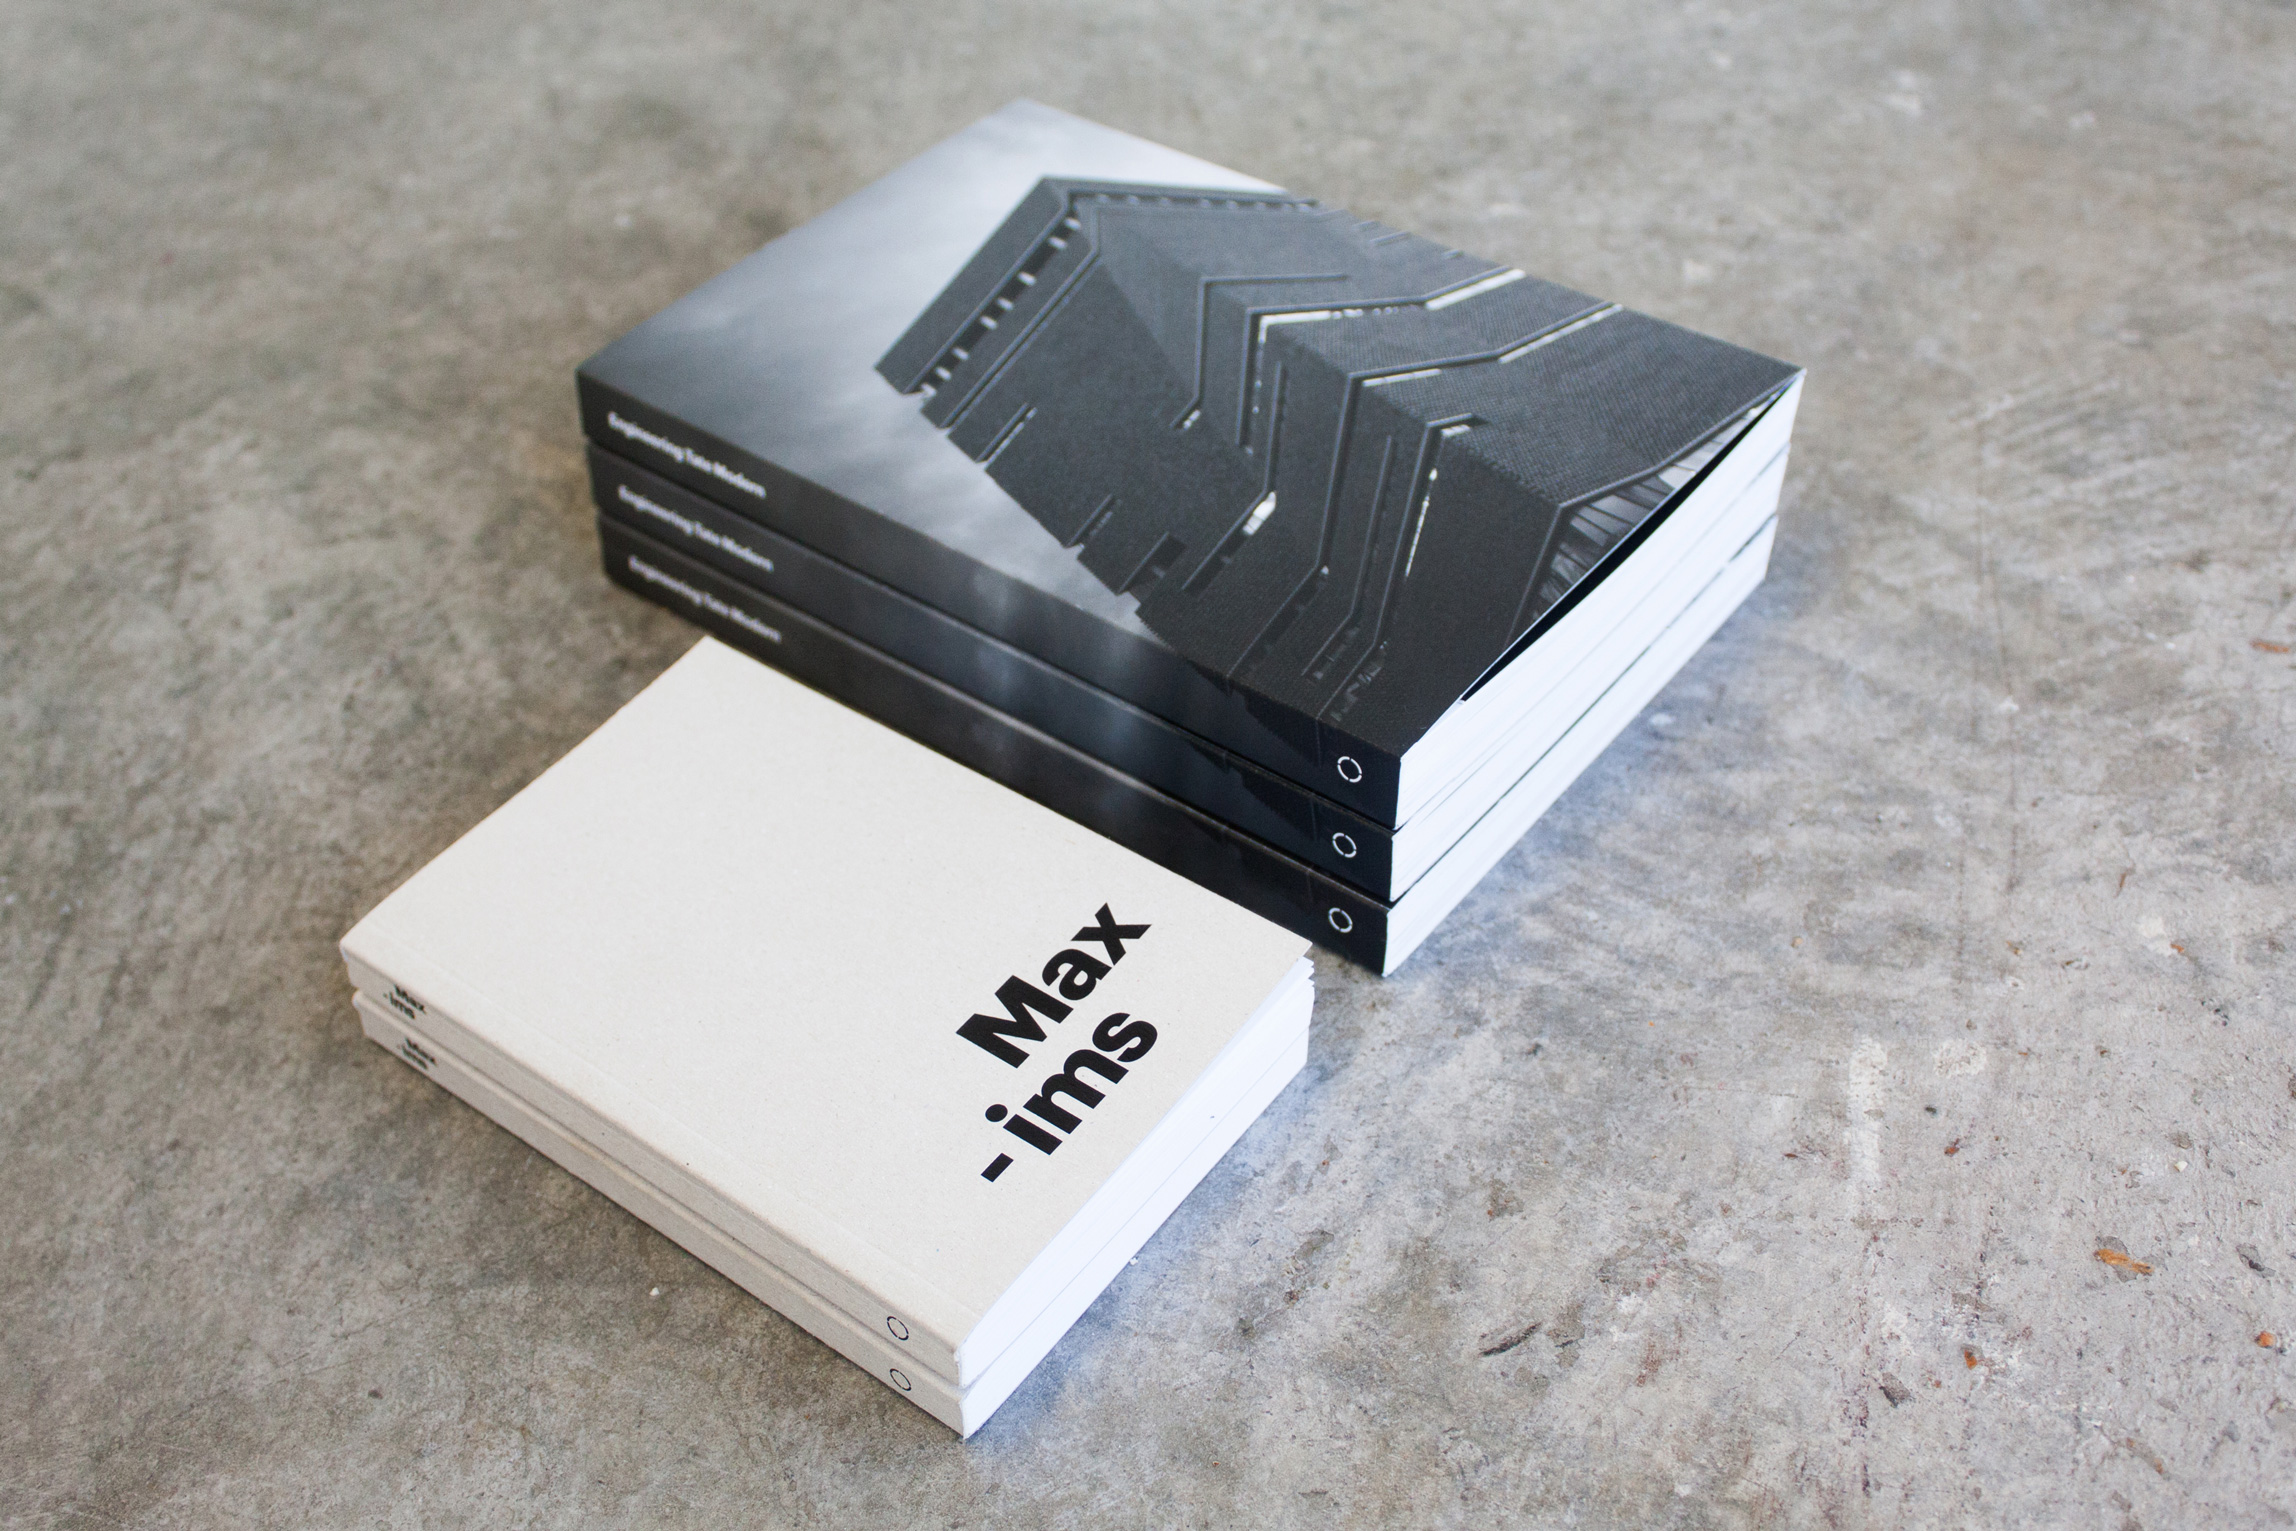 Max Fordham 50th anniversary books Maxims and Tate Modern 2 beautiful engineering marketing